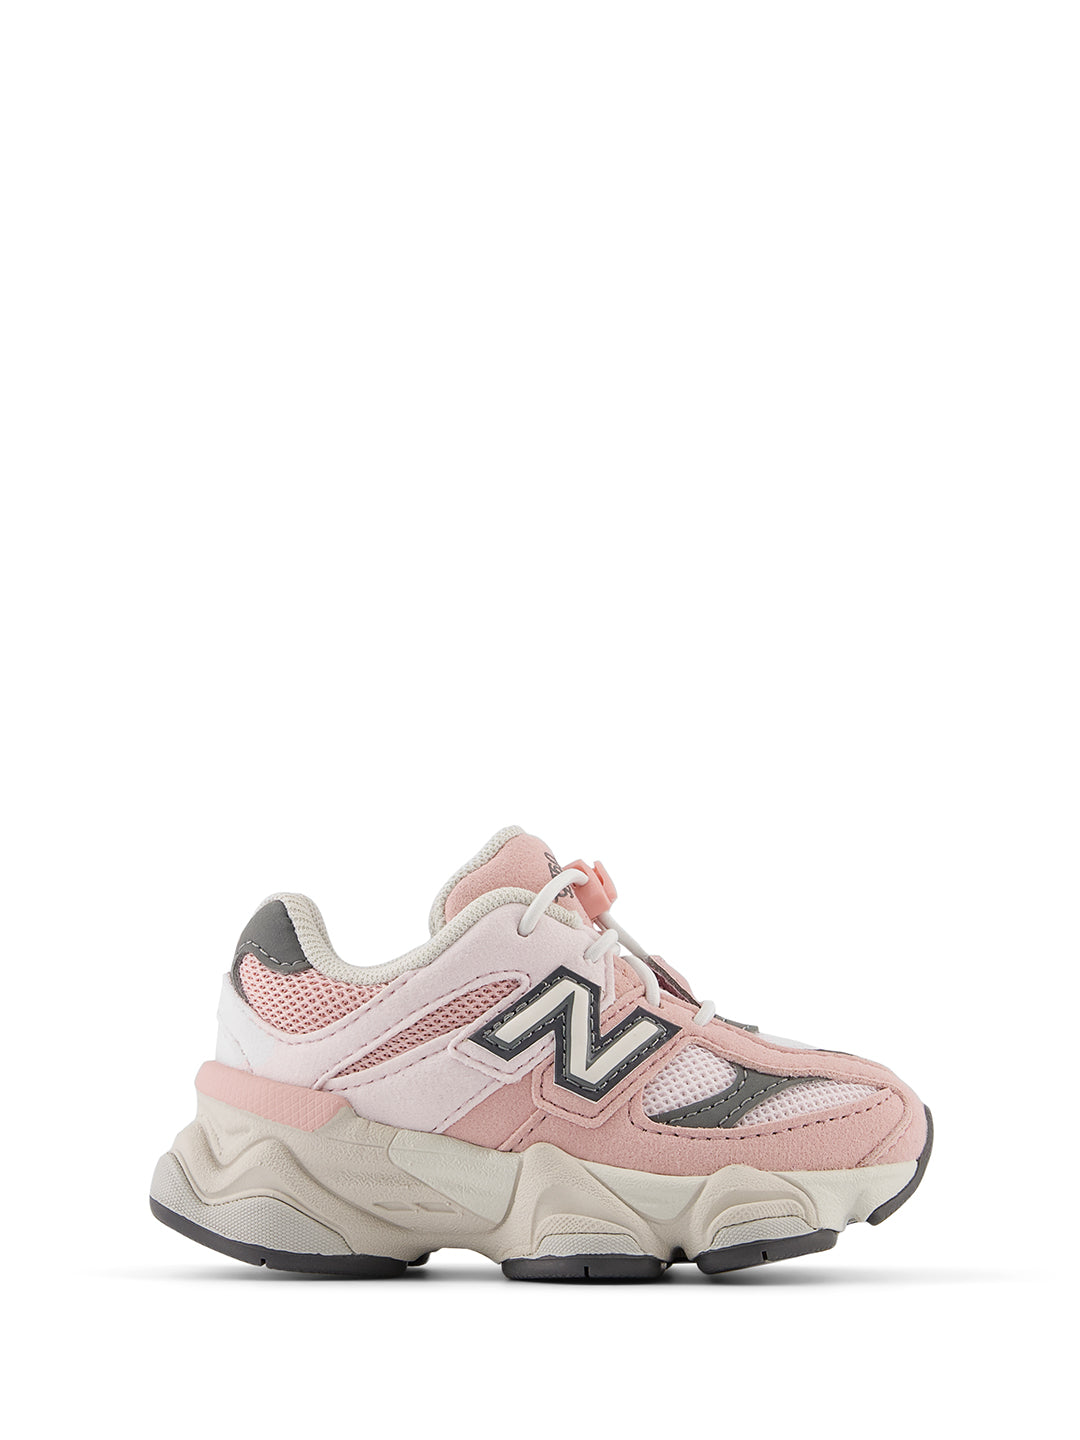 New Balance 9060 sneakeres neonato rosa con cordino